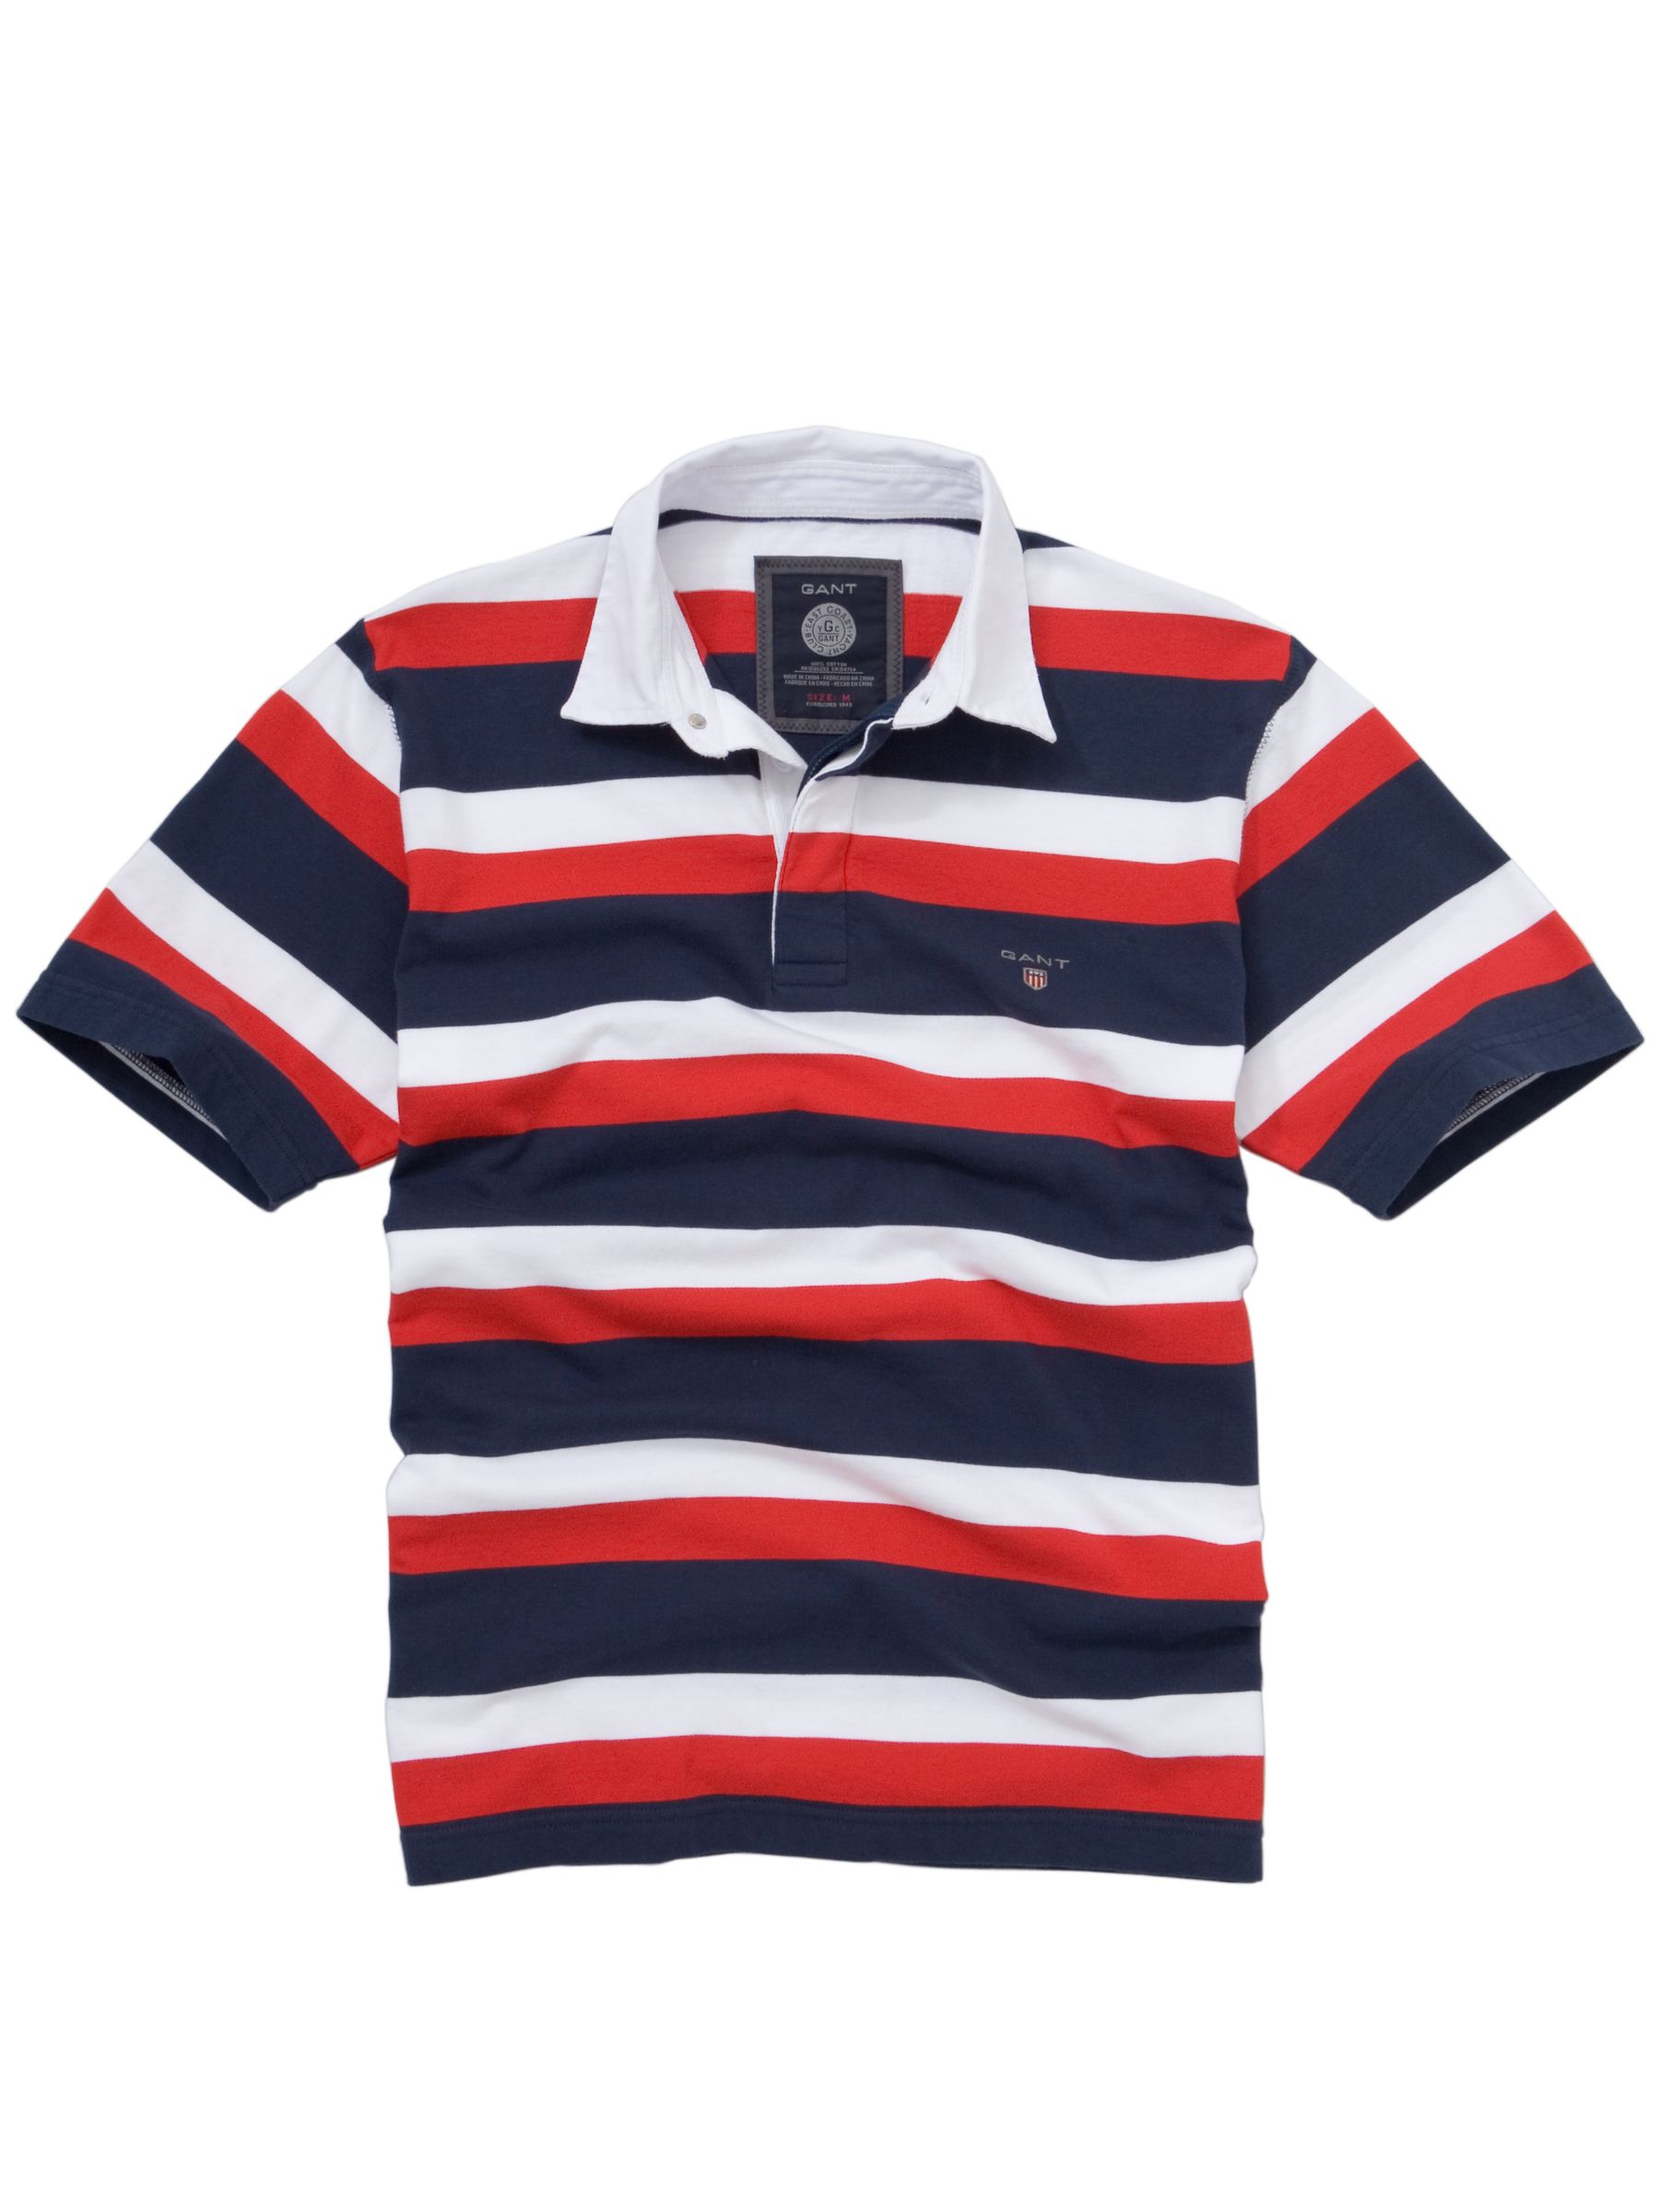 Gant Multi Bar Stripe Rugby Shirt, French Navy/Red